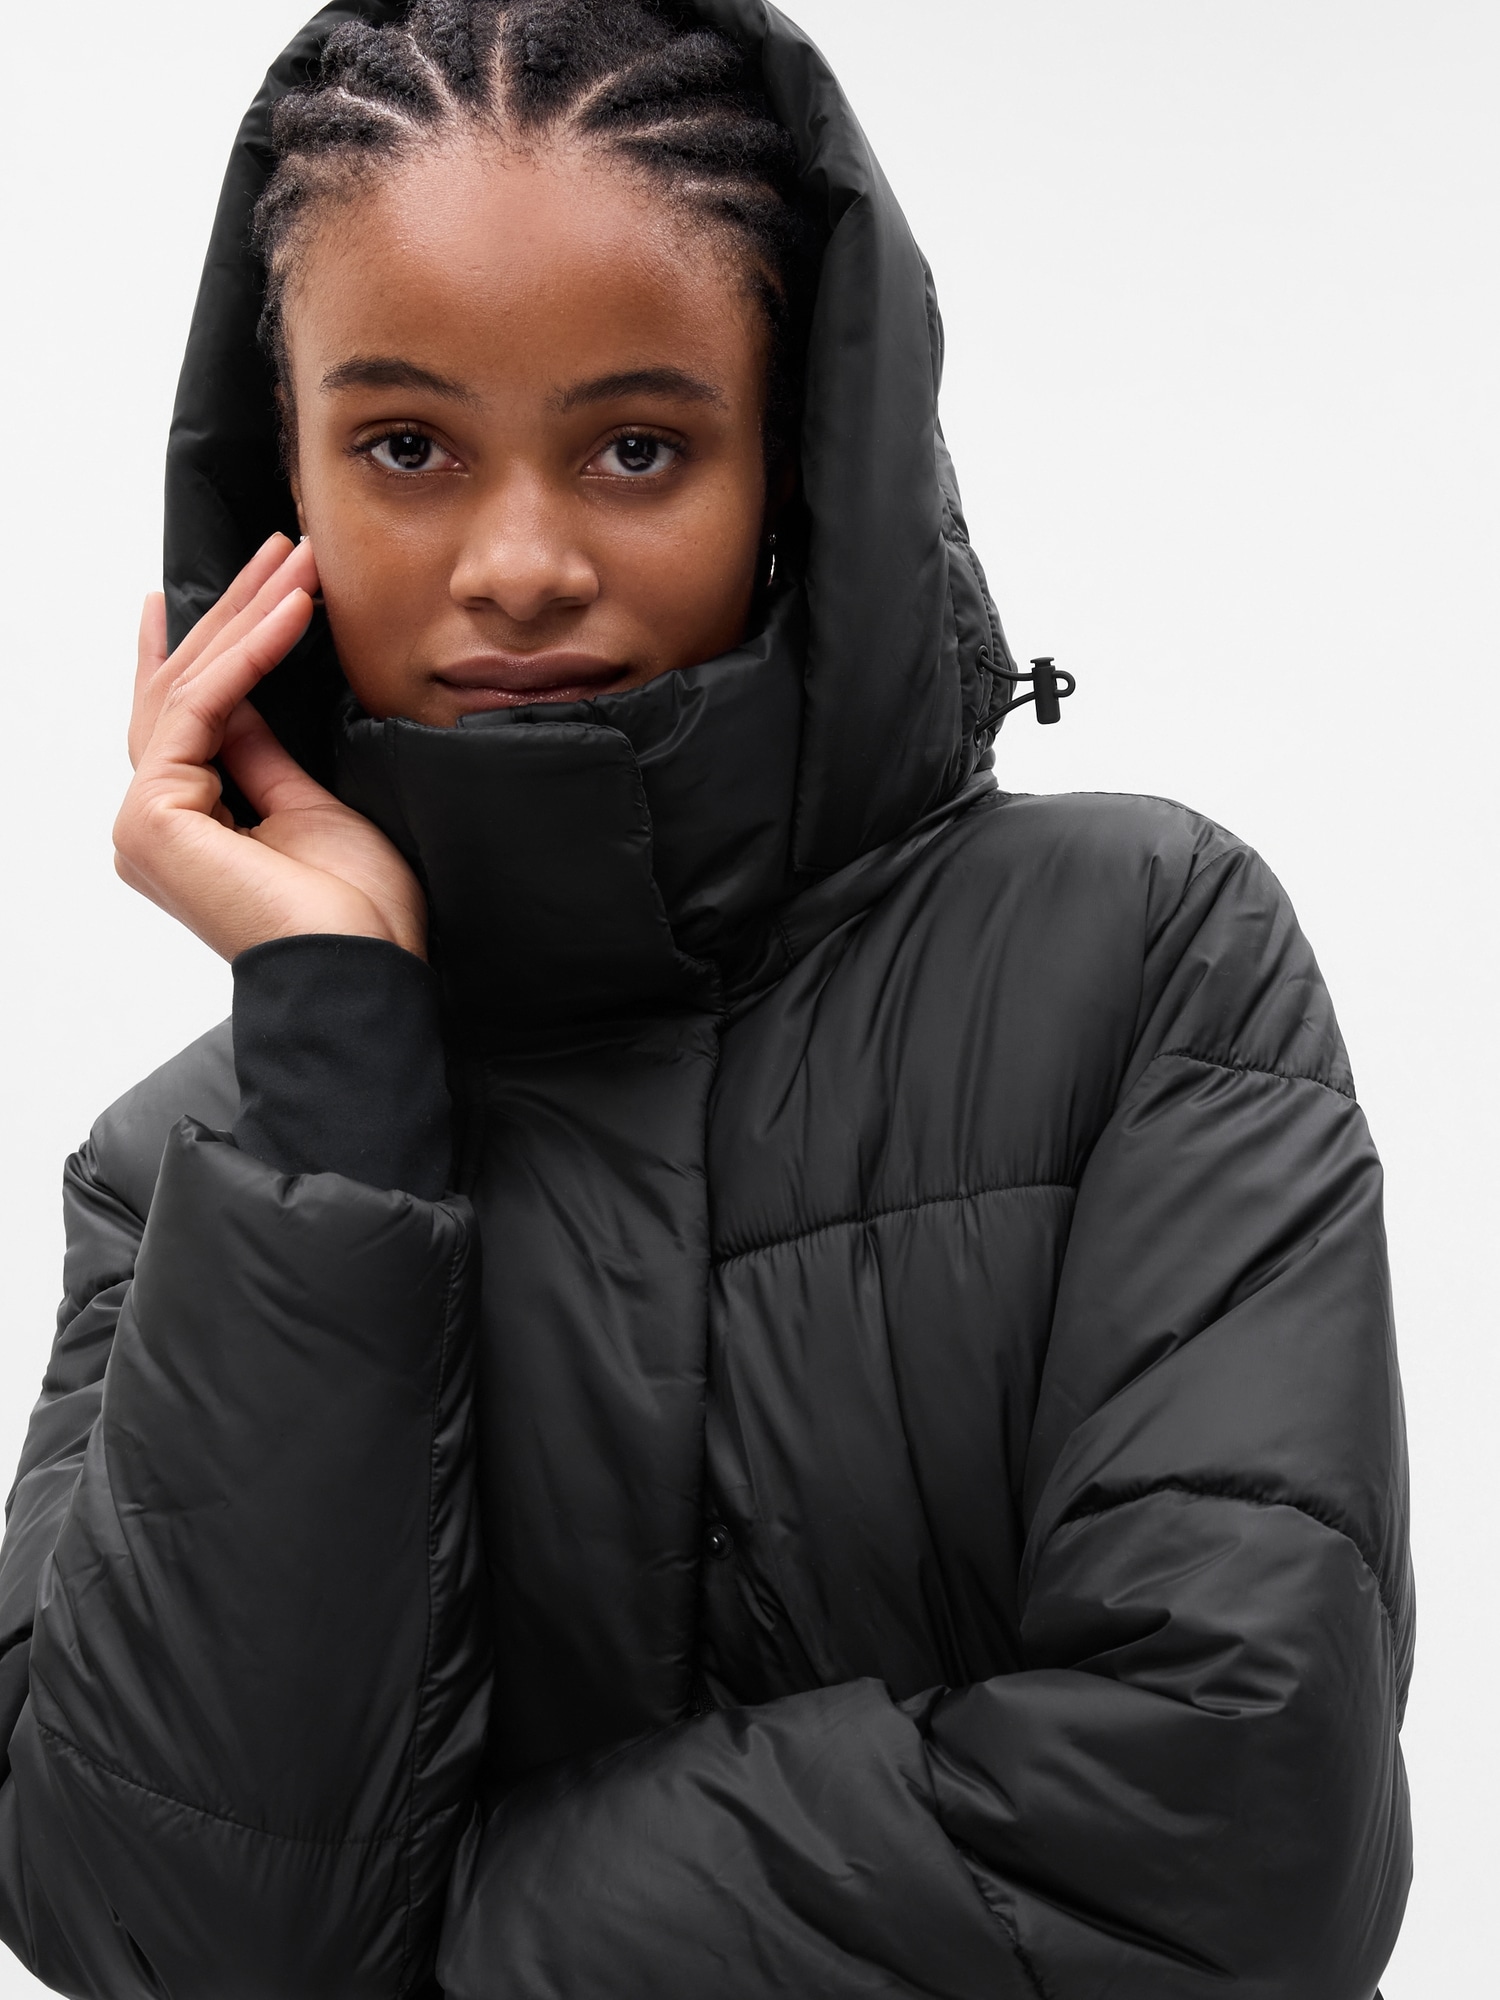 GAP Black Lightweight Puffer Primaloft, Removable Hood,Jacket,Coat - Medium  | eBay